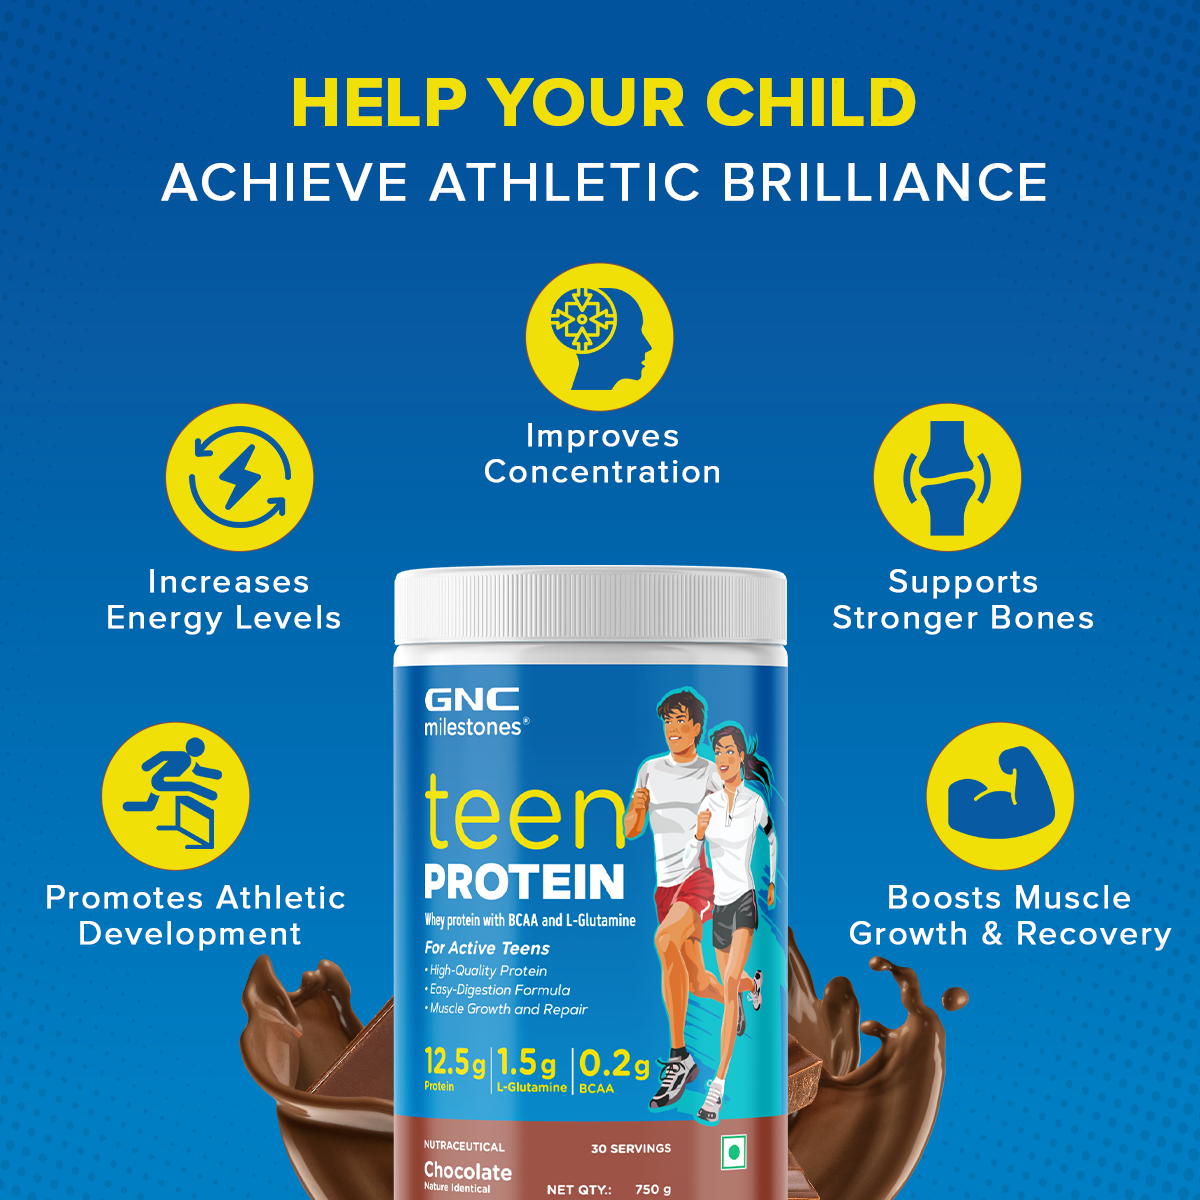 GNC milestones Teen Protein - Boosts Athletic Performance & Potential In Active Teens